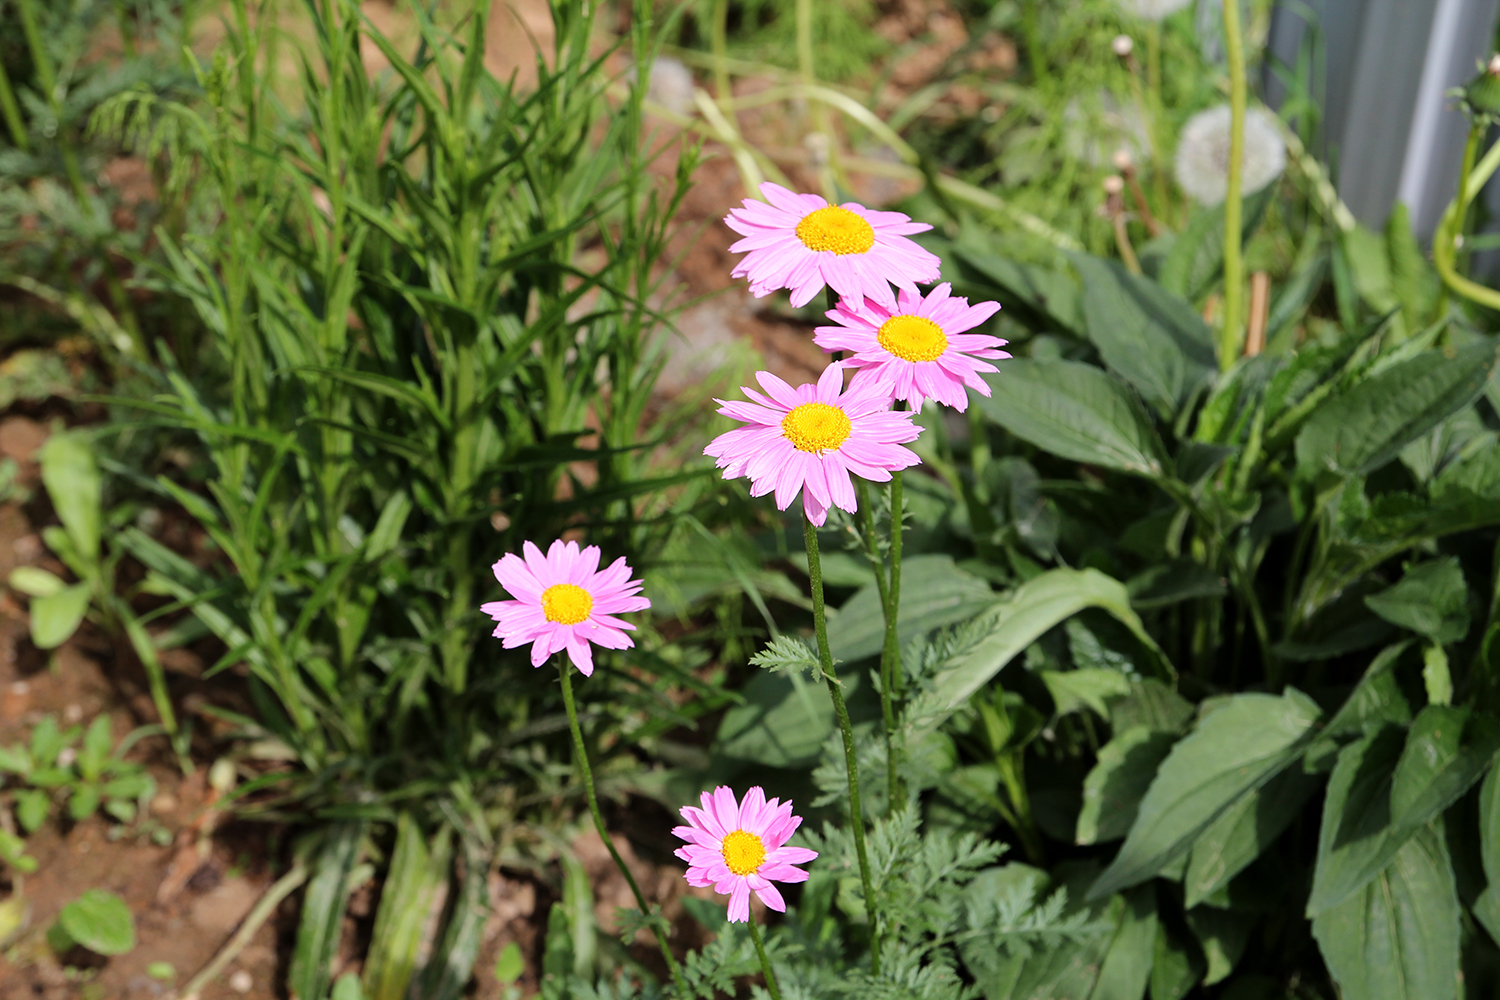 Цветы пиретрум посадка и уход фото когда сеять семена